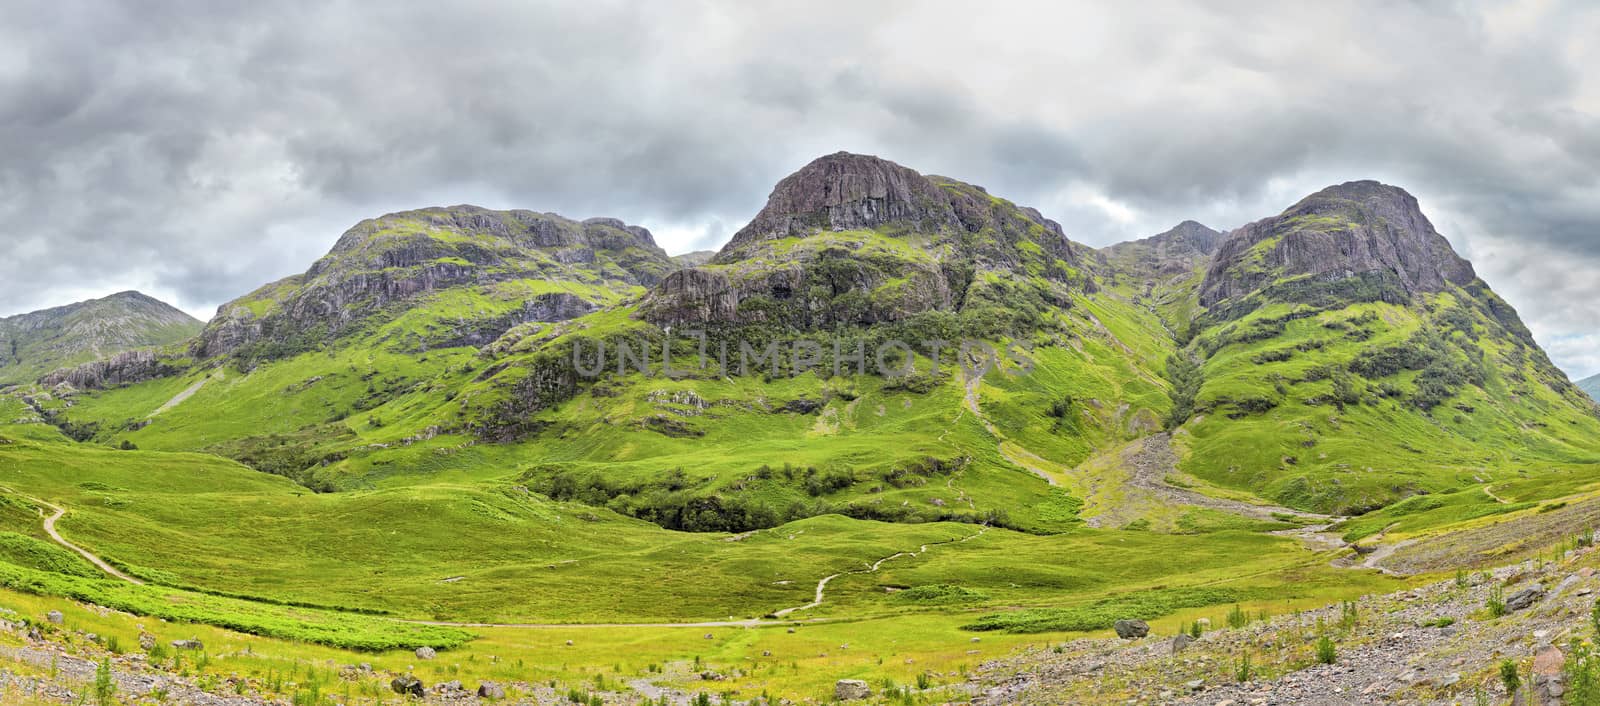 panoramic view of the Three Sisters of Glencoe, Scotland